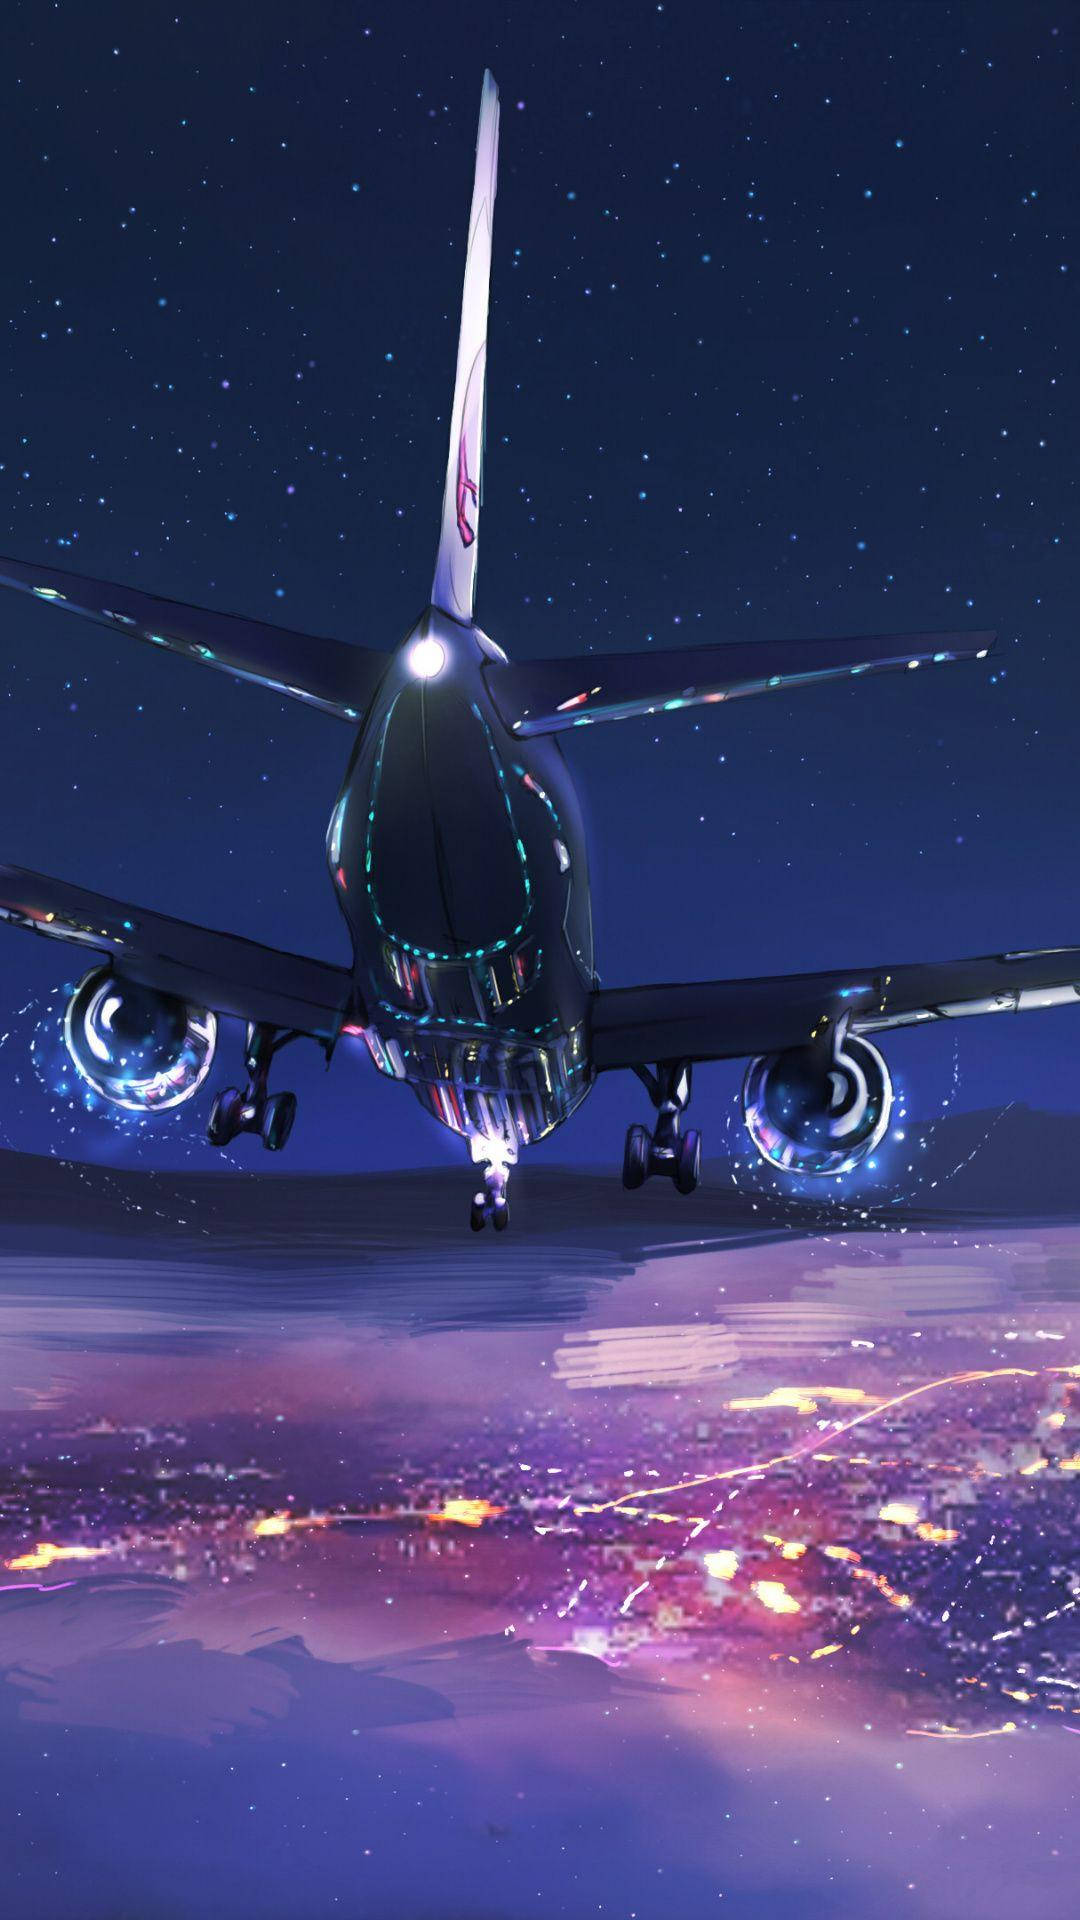 Anime Purple Airplane Iphone Background